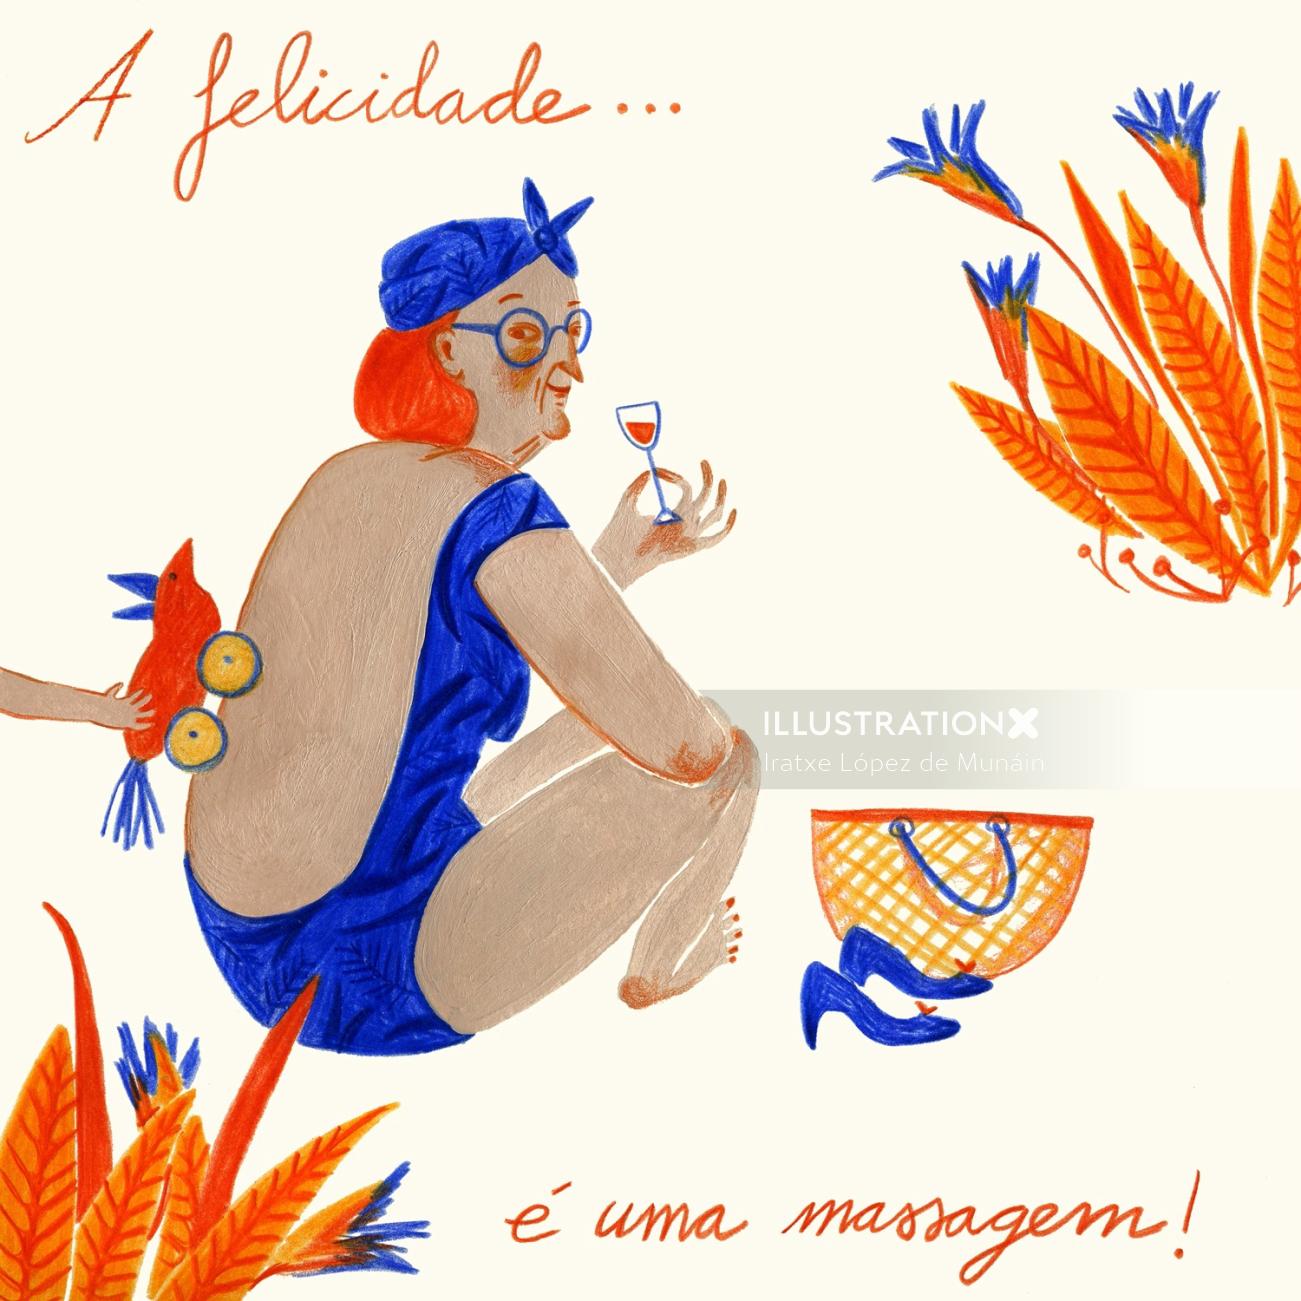 Lifestyle Illustration for Felicidario in Portugal.